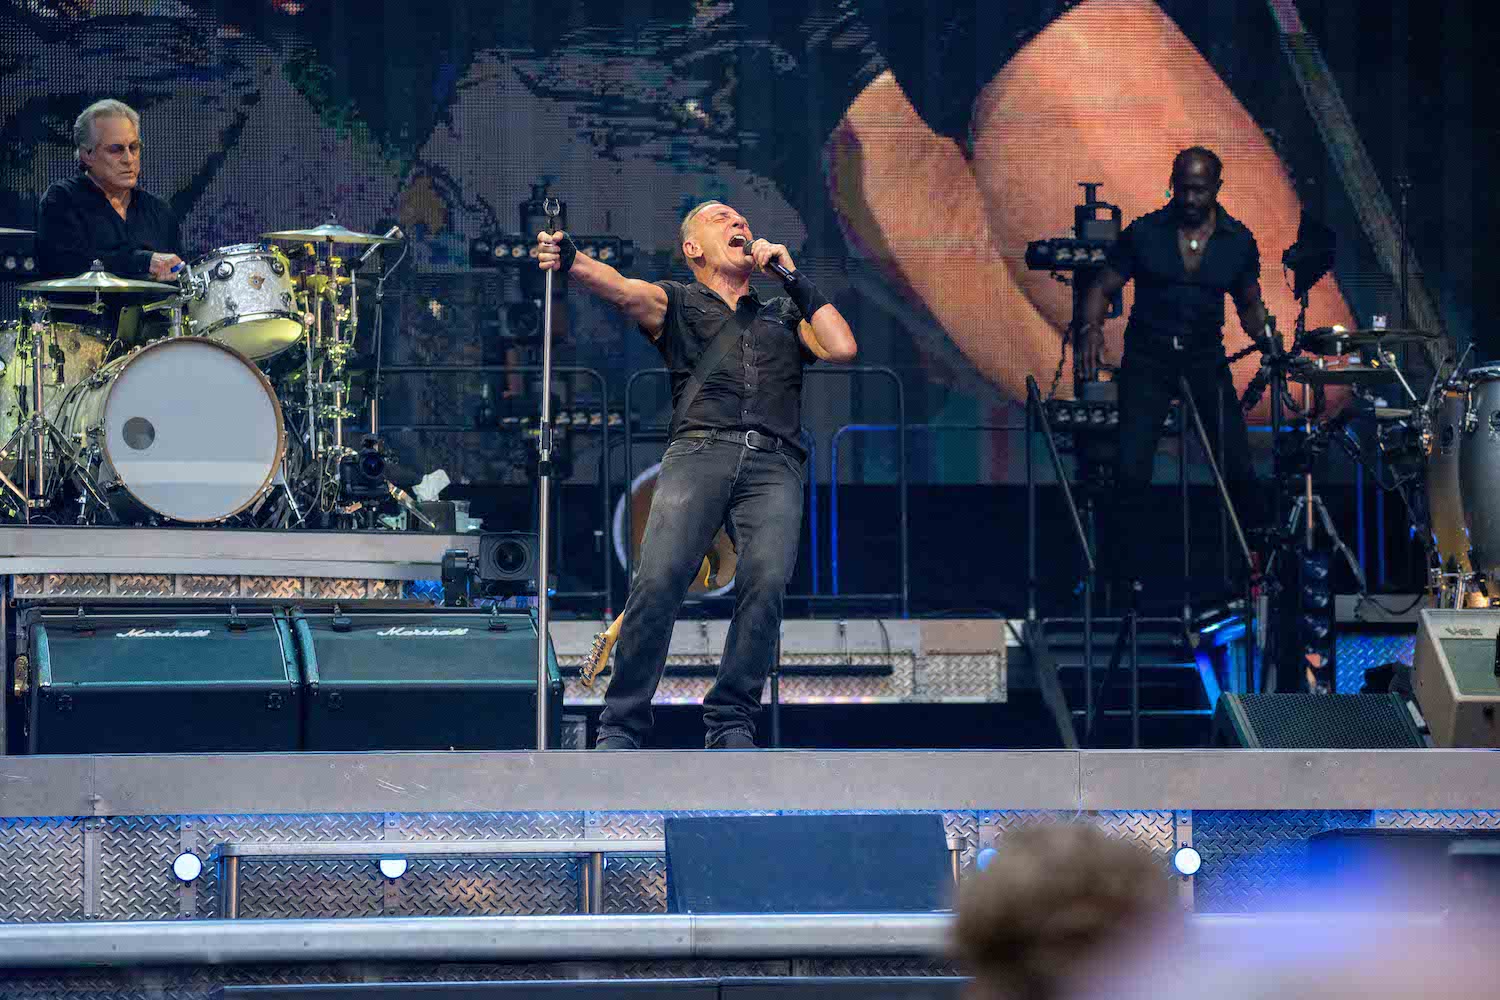 Bruce Springsteen & E Street Band at MERKUR SPIEL-ARENA, Düsseldorf, Germany on June 21, 2023.